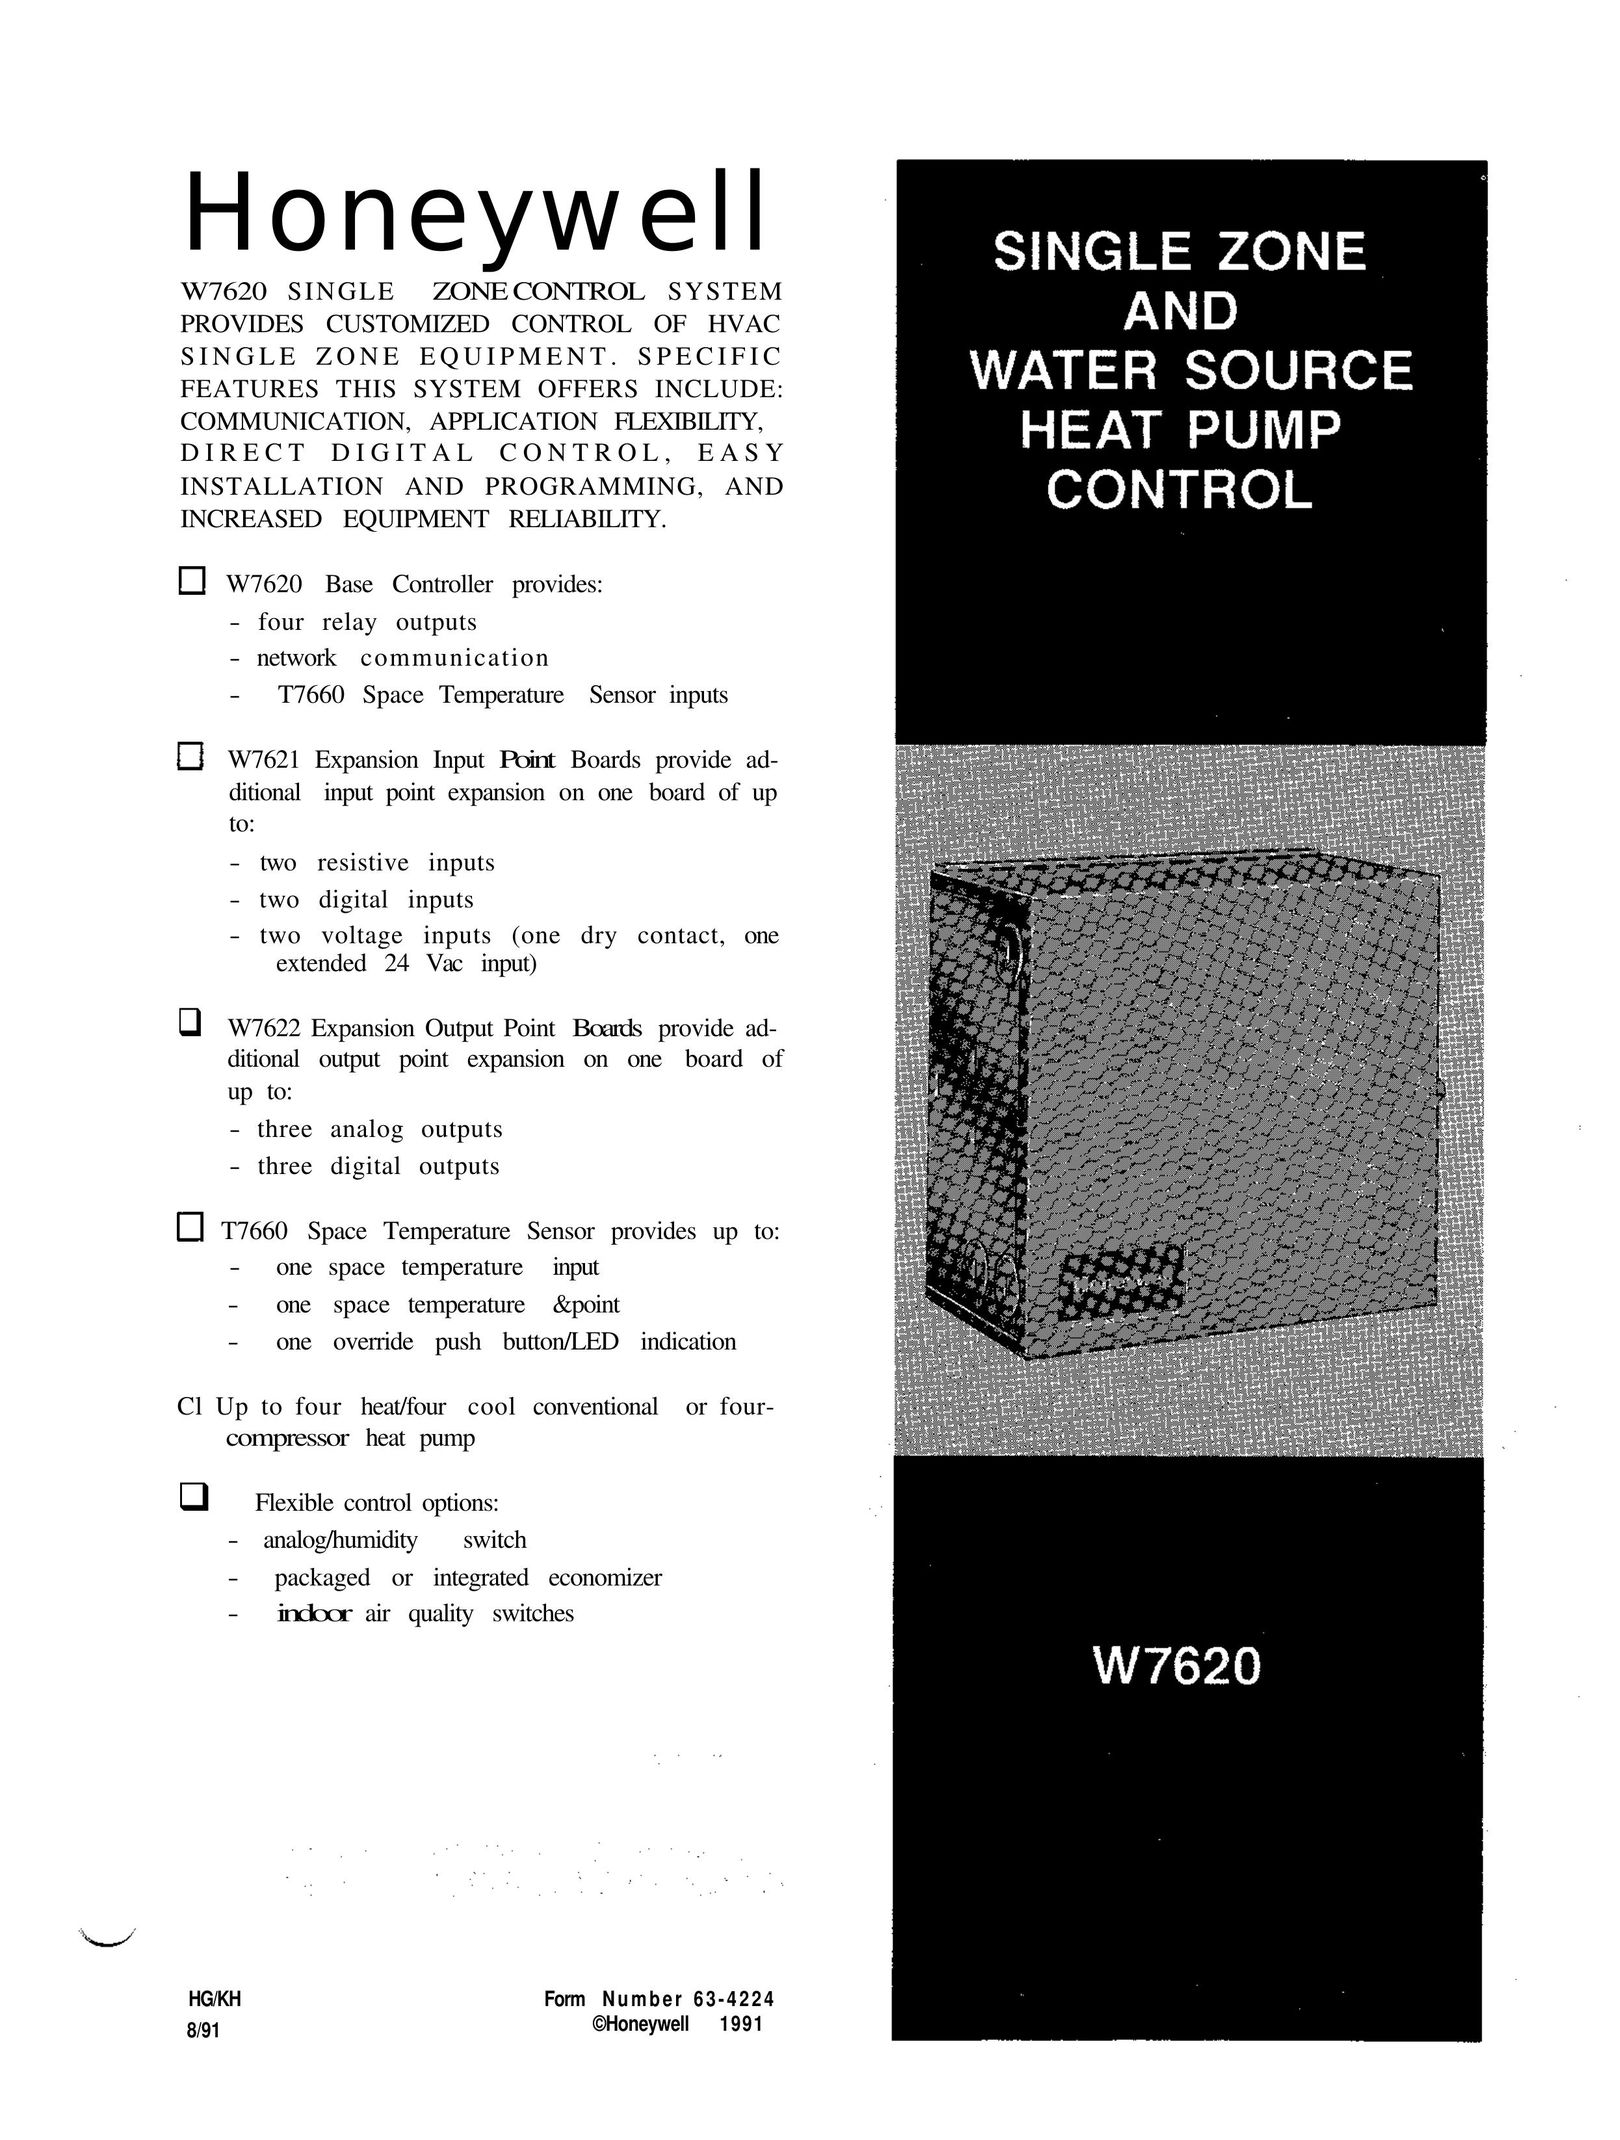 Honeywell W7620 Heat Pump User Manual